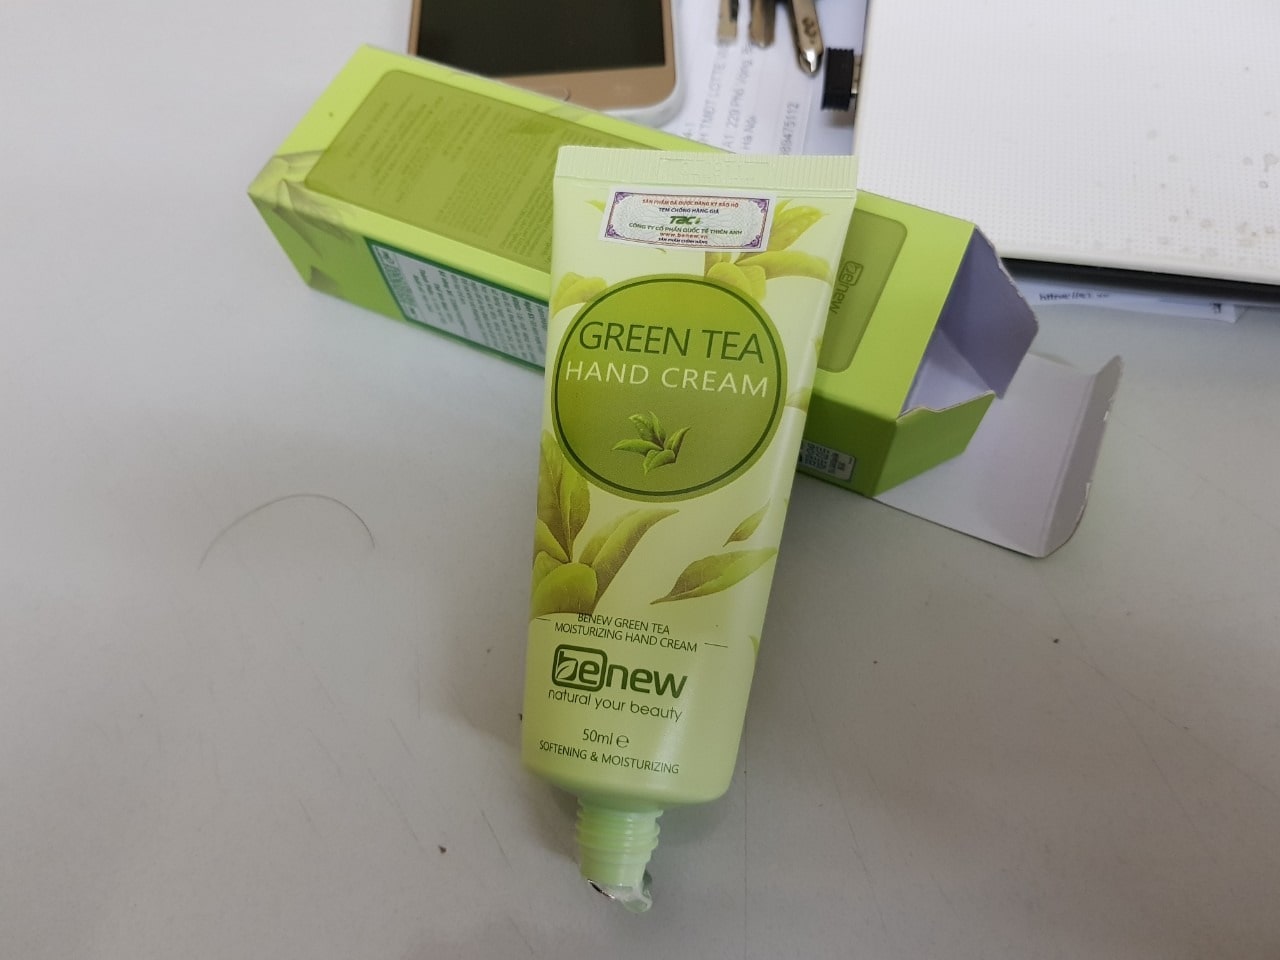 Benew green tea hand cream